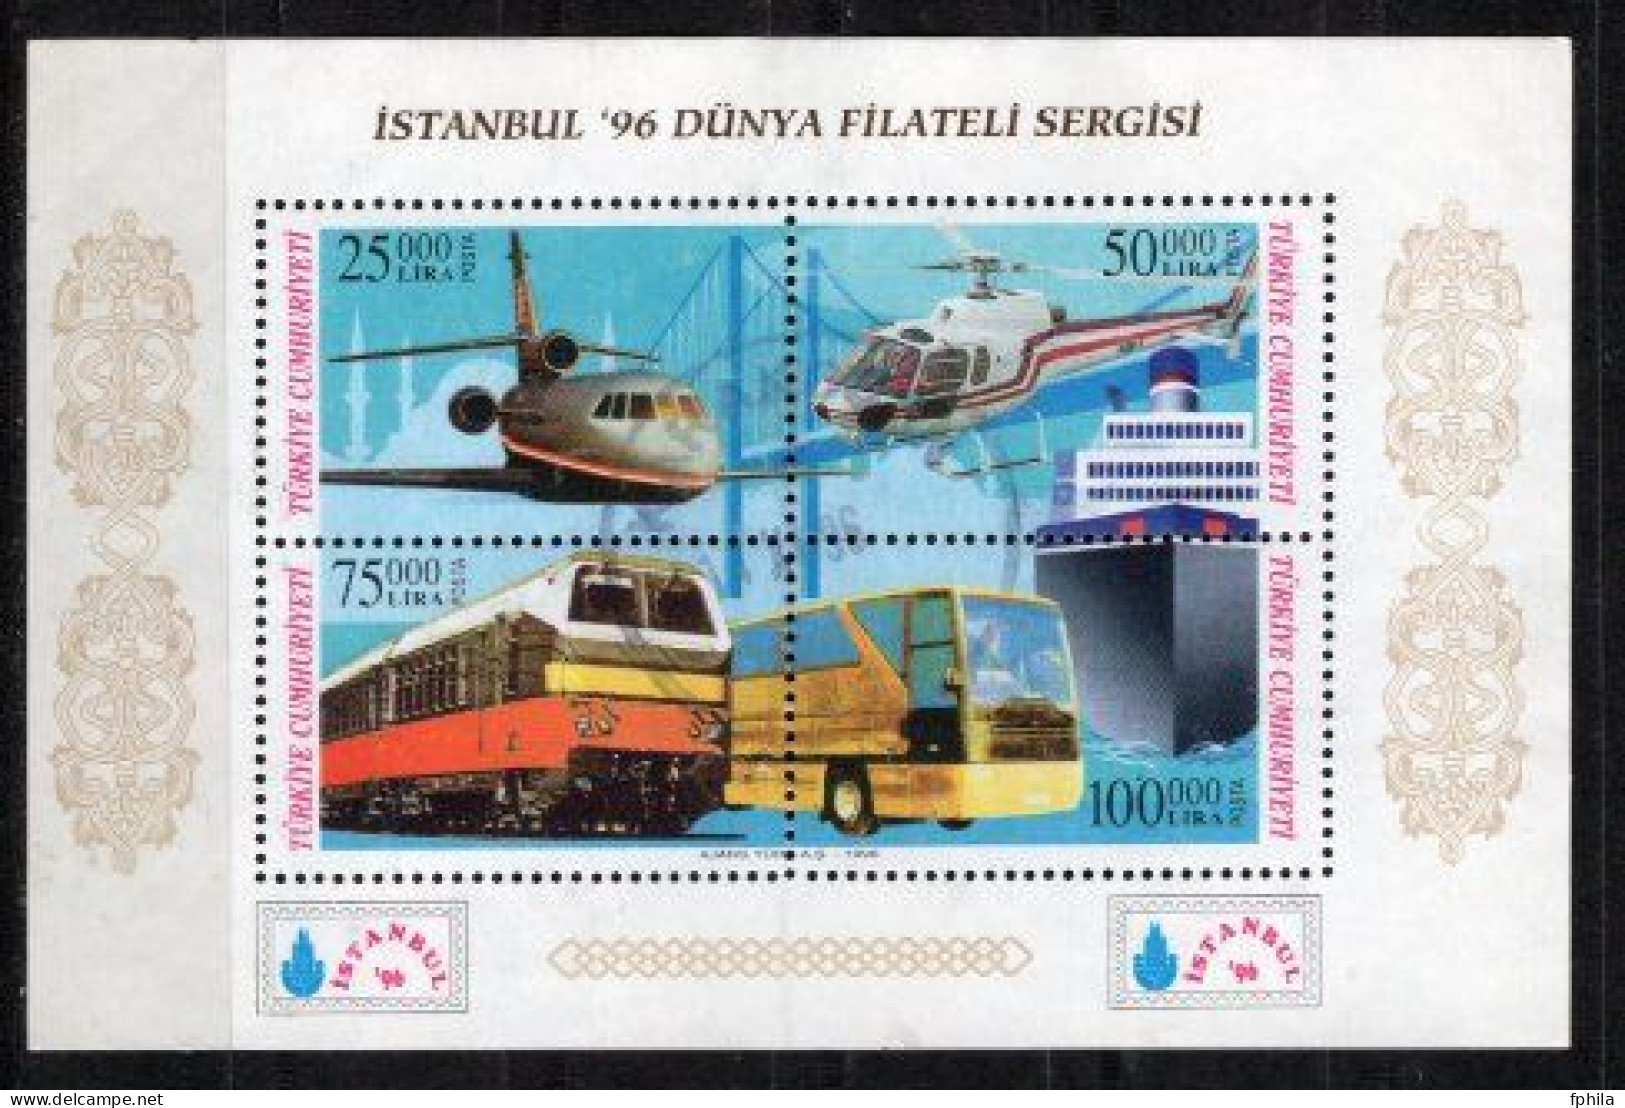 1996 TURKEY ISTANBUL '96 WORLD PHILATELIC EXHIBITION - VEHICLES SOUVENIR SHEET USED - Blocks & Kleinbögen